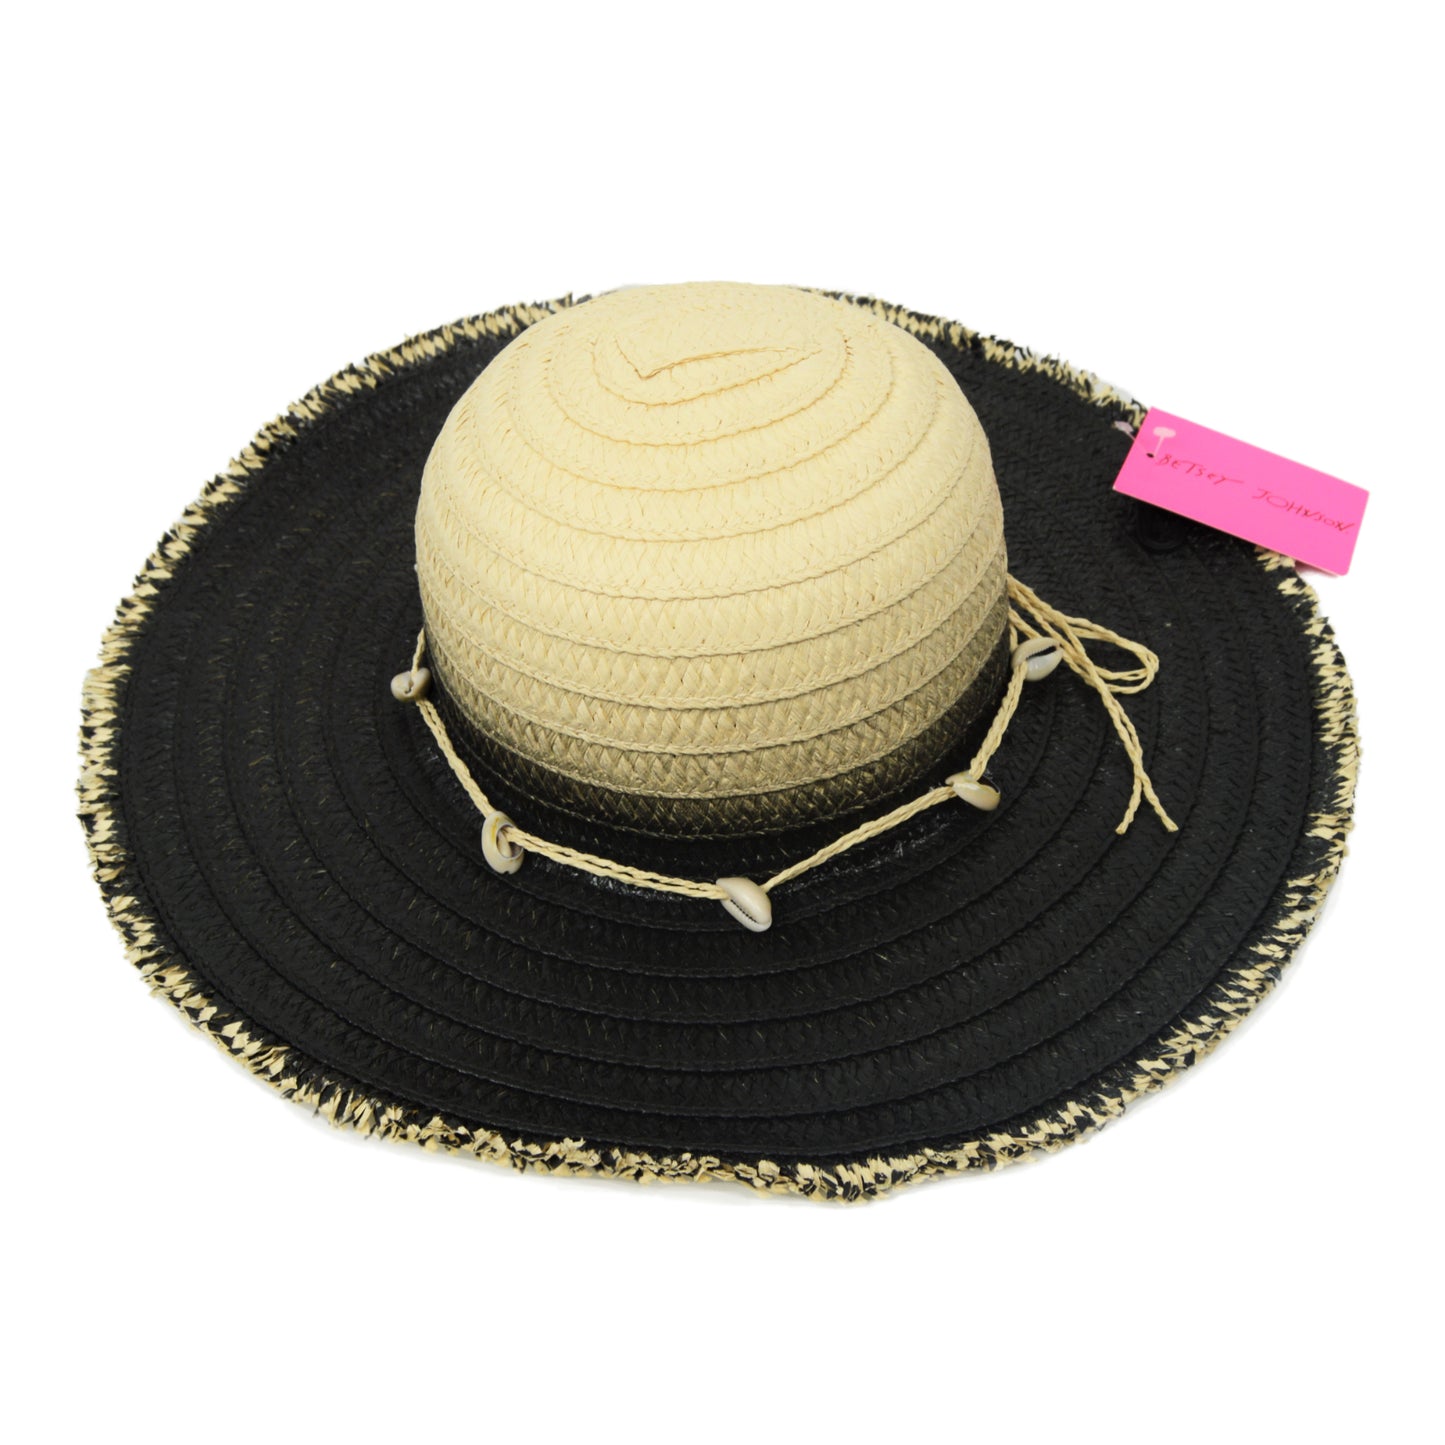 Betsey Johnson Women's Ombre Oasis Floppy Hat